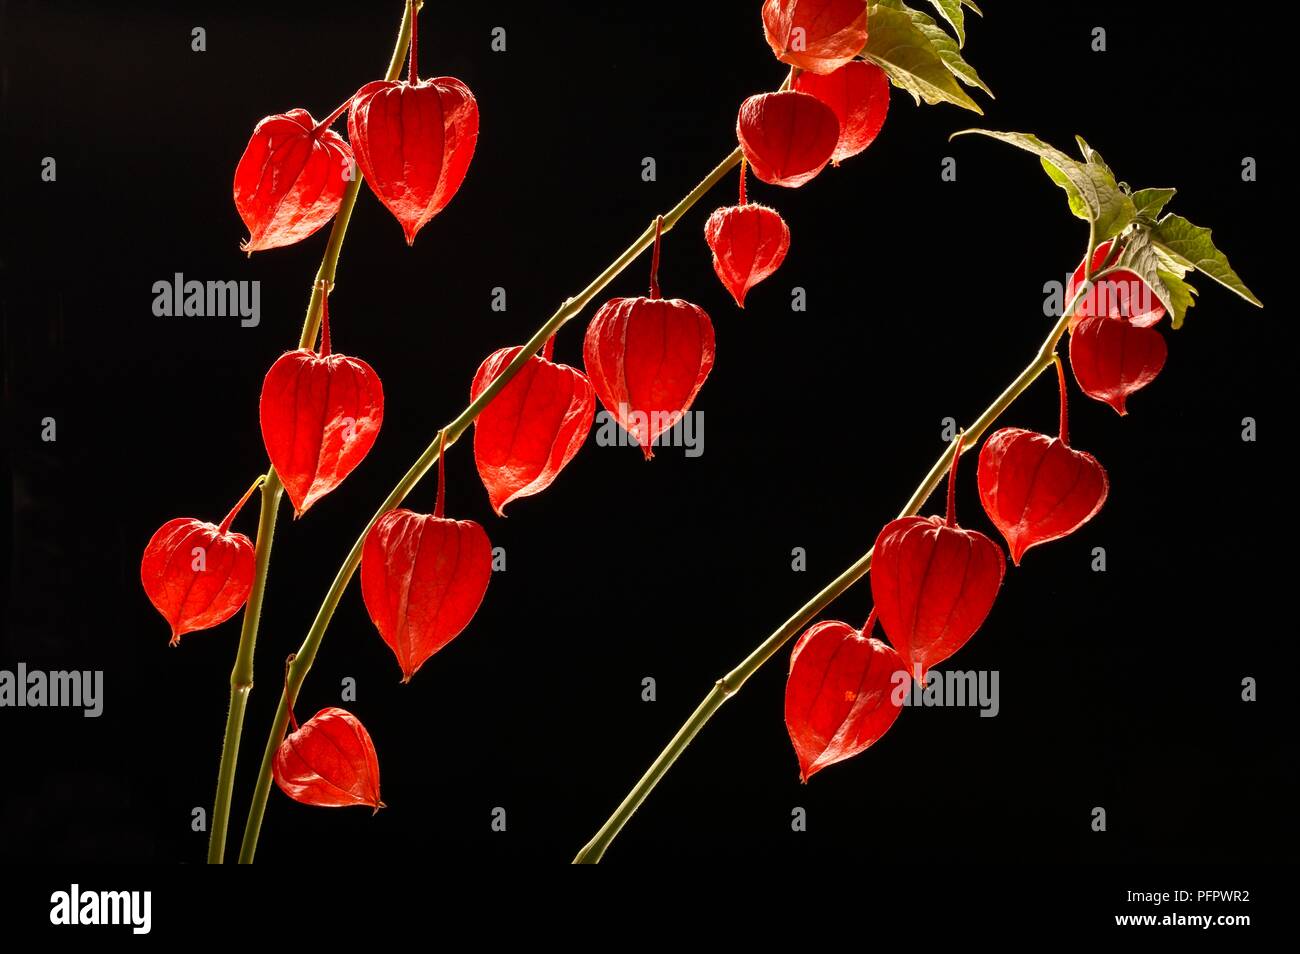 Physalis alkekengi (Chinese lantern) red fruit on stems, close-up Stock Photo